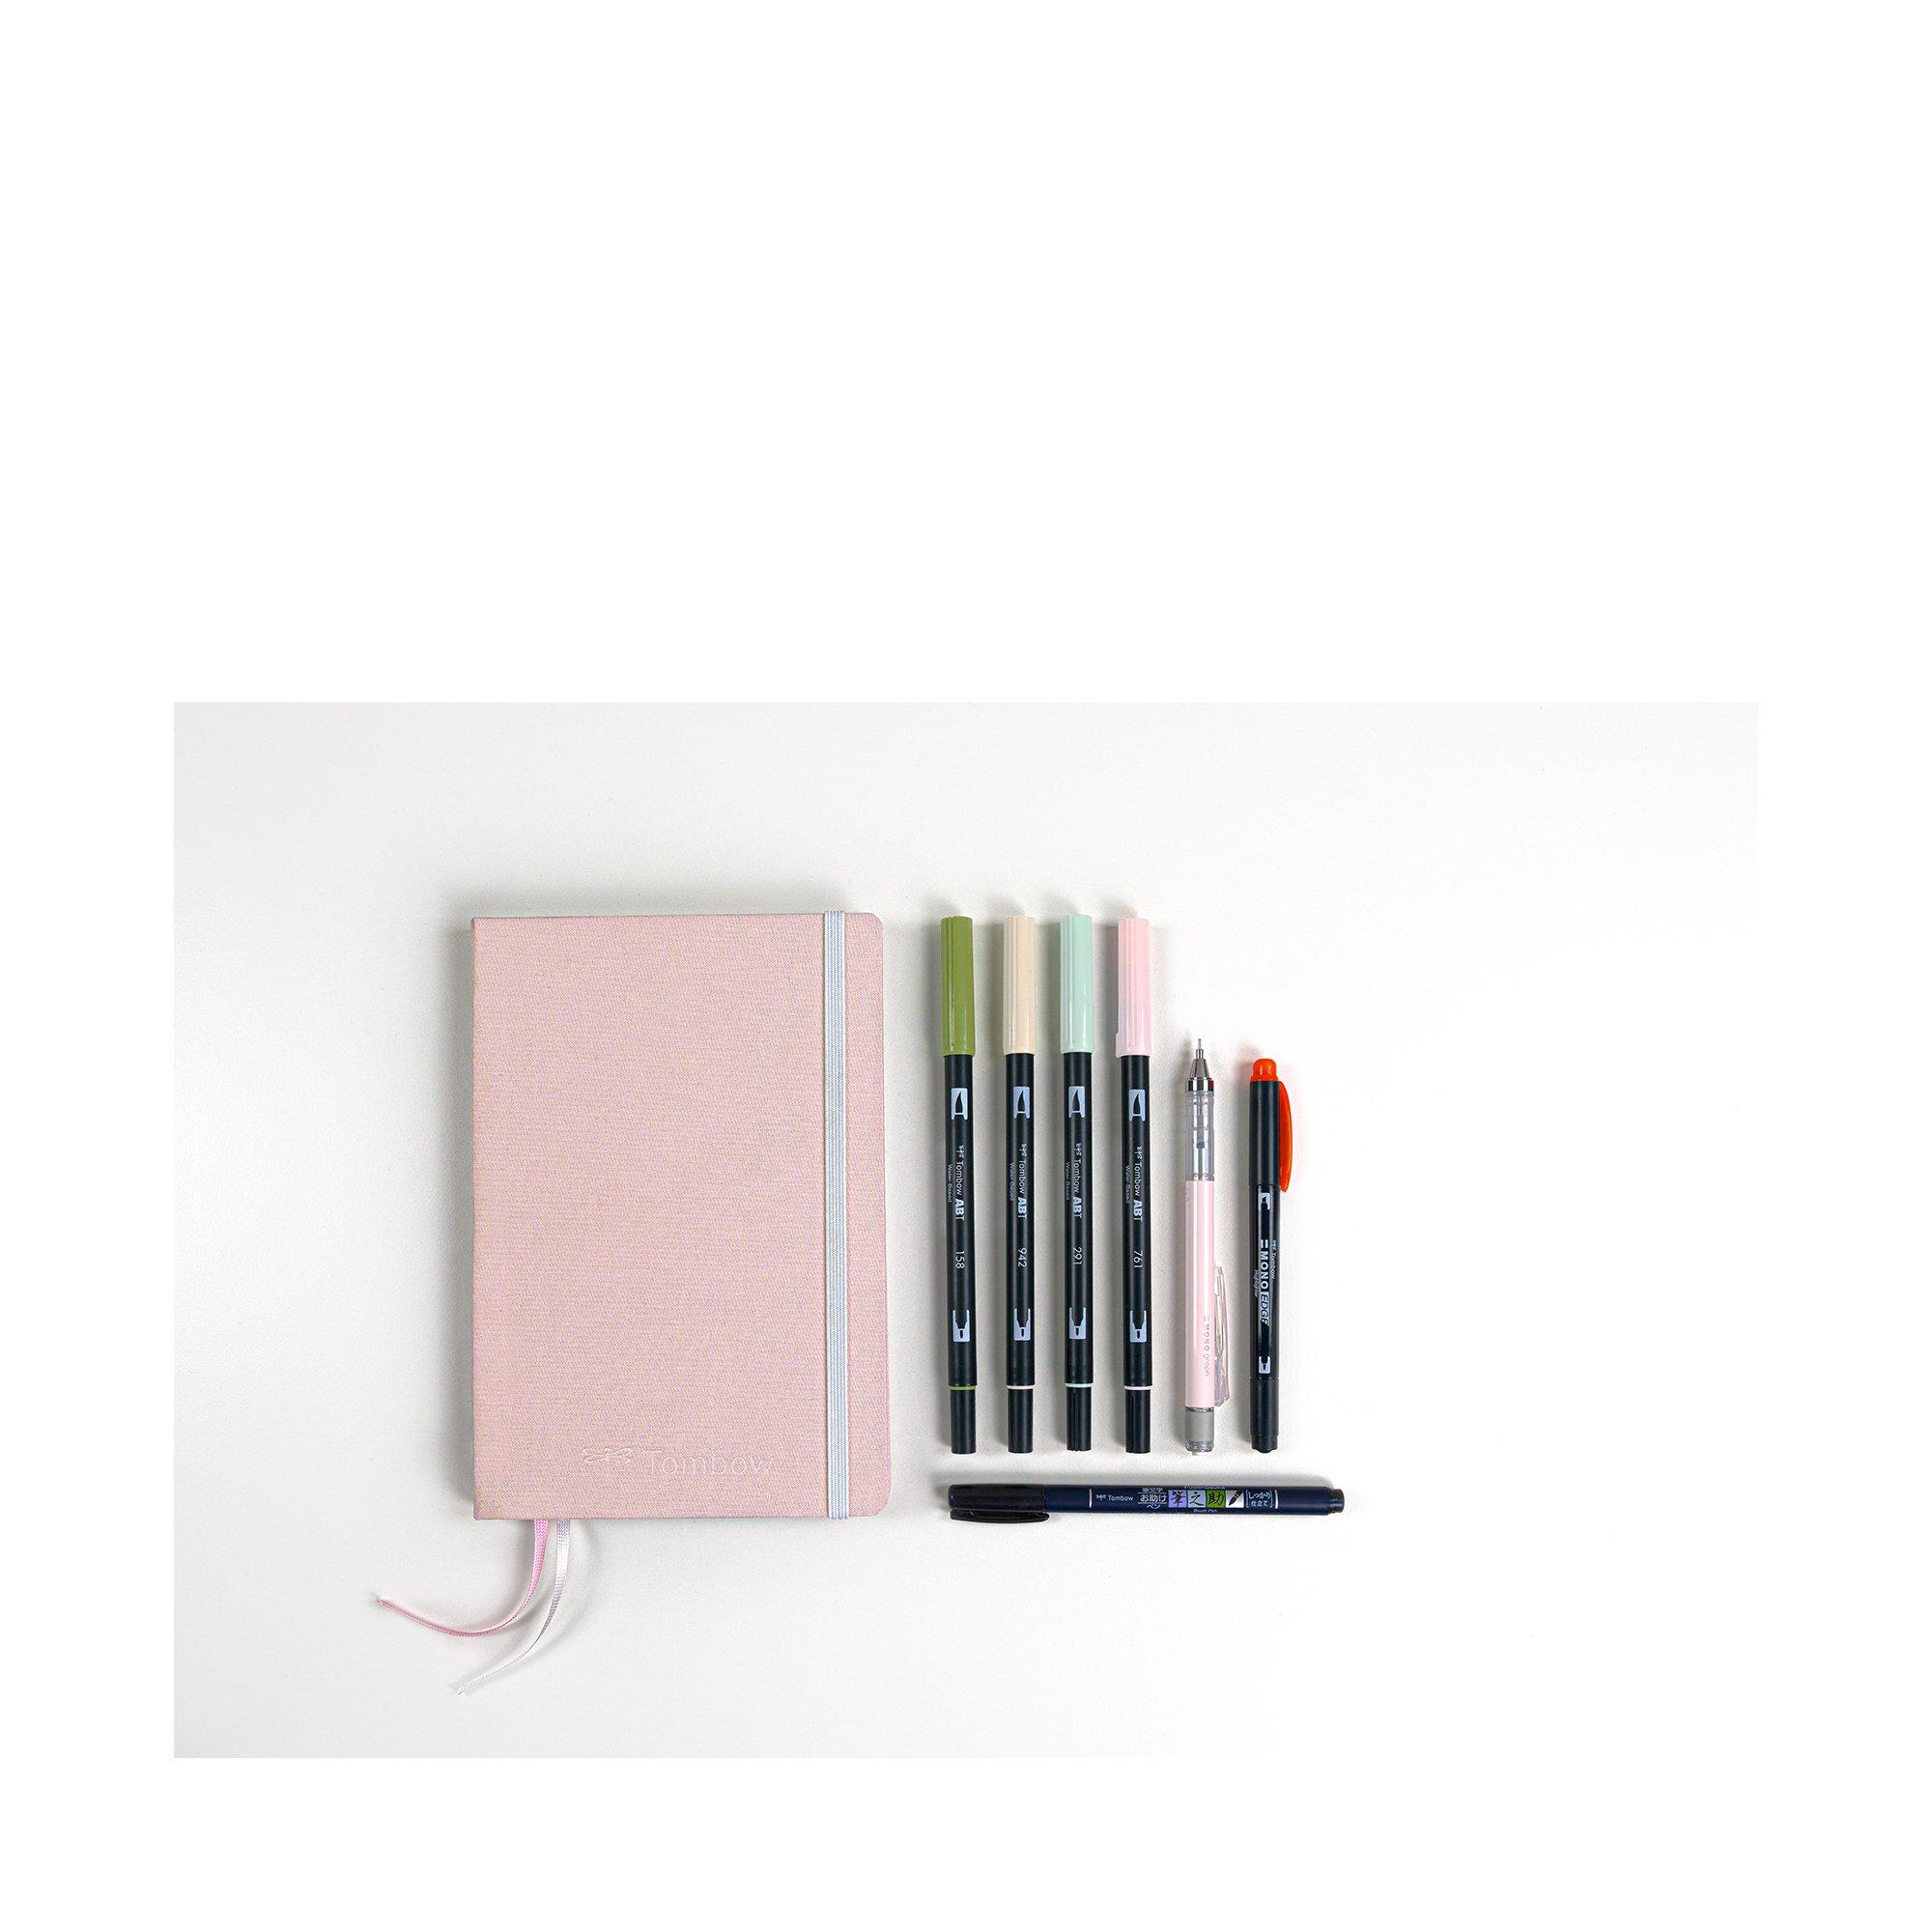 Tombow Carnet de notes Creative Journaling Kit Pastel 